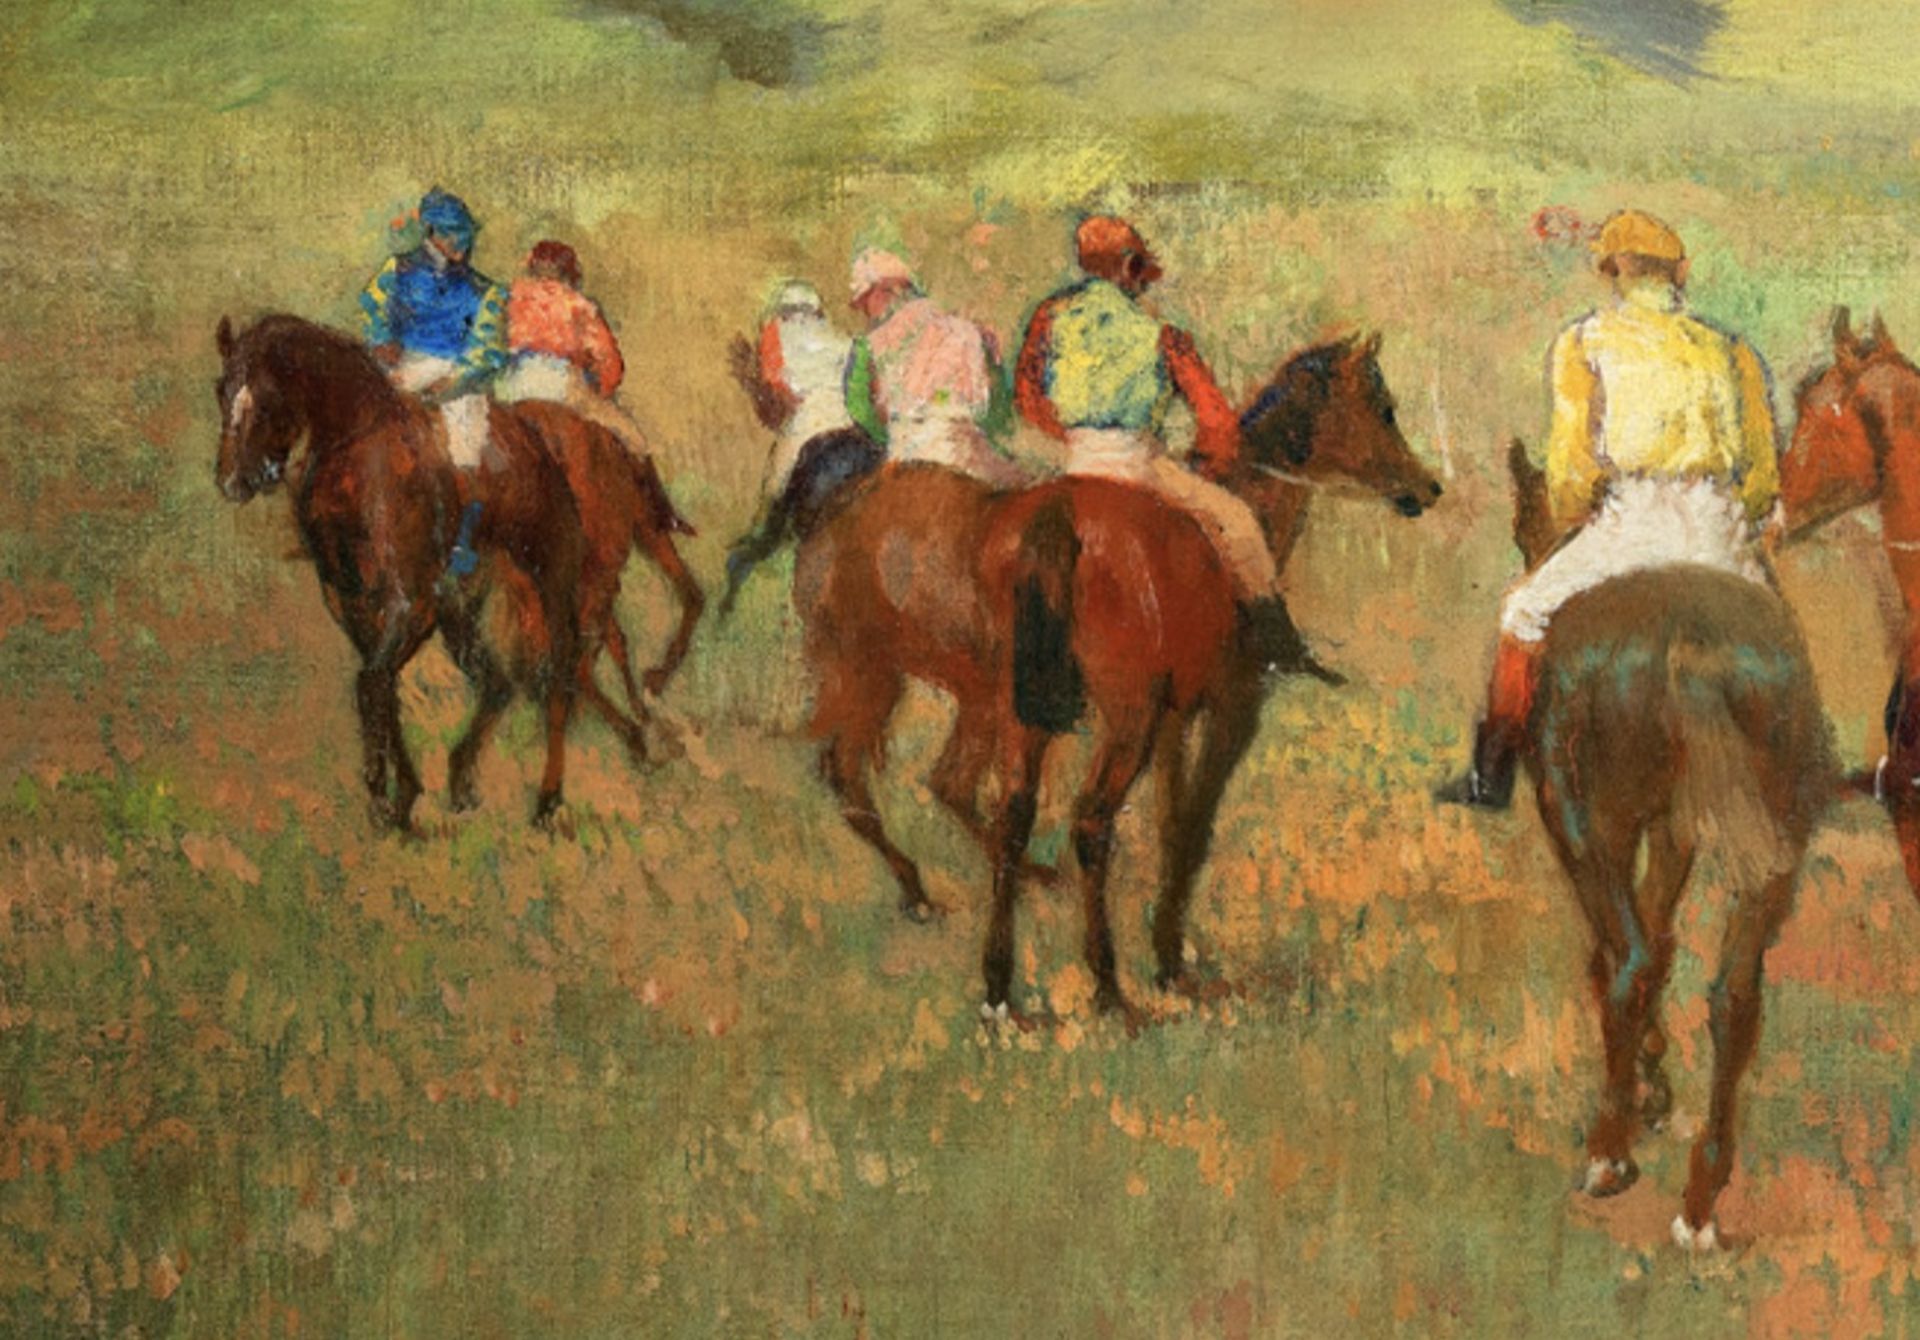 Edgar Degas "Jockeys on Horseback, Distant Hills" Wallpaper - Image 4 of 6